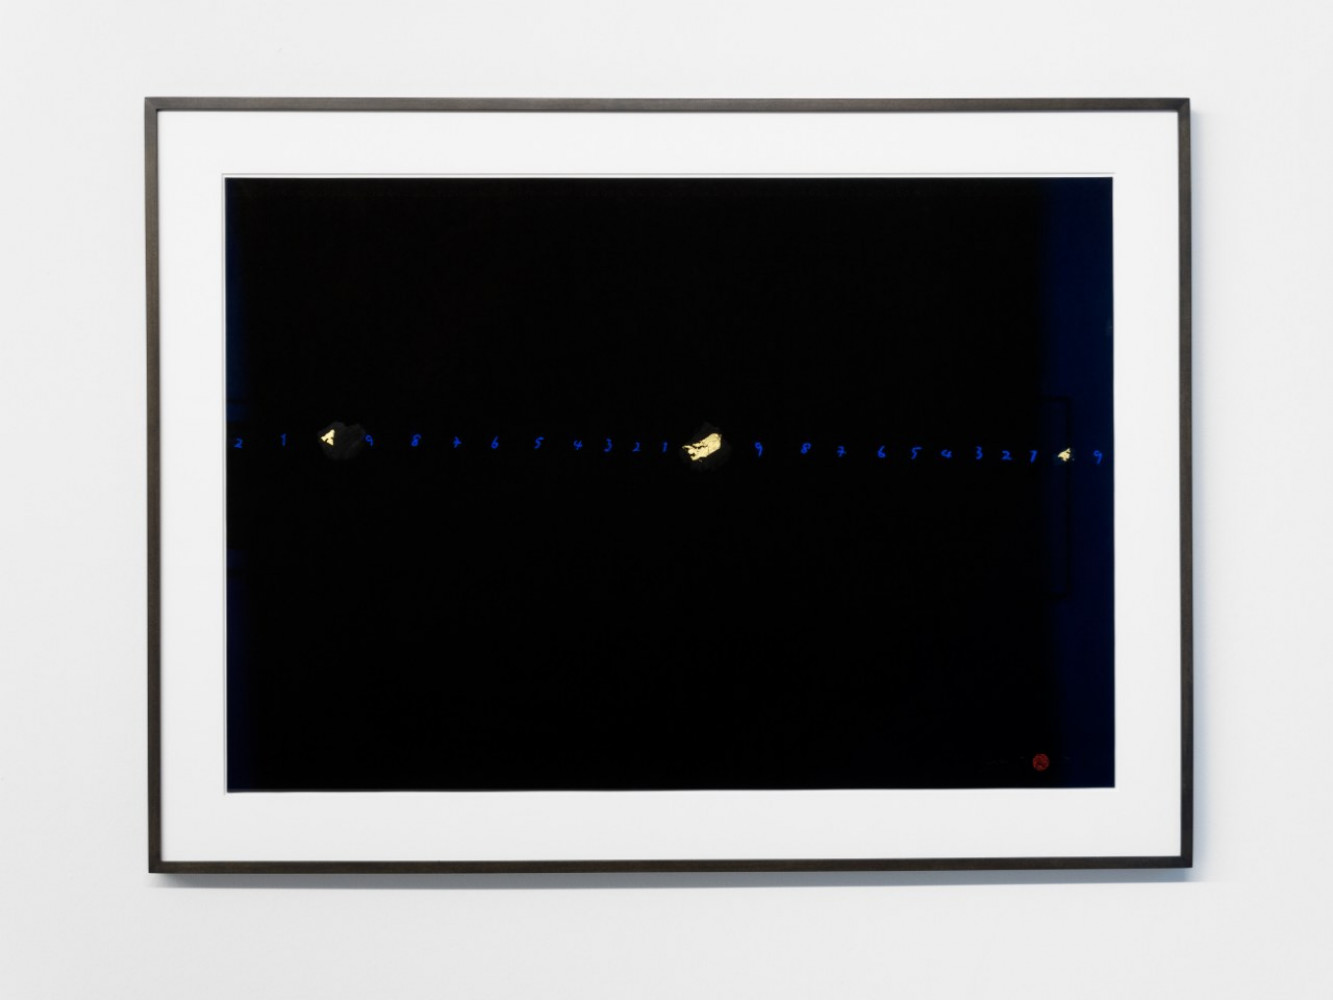 Tatsuo Miyajima, ‘Counting Gold’, 1995, Pastel and gold on paper